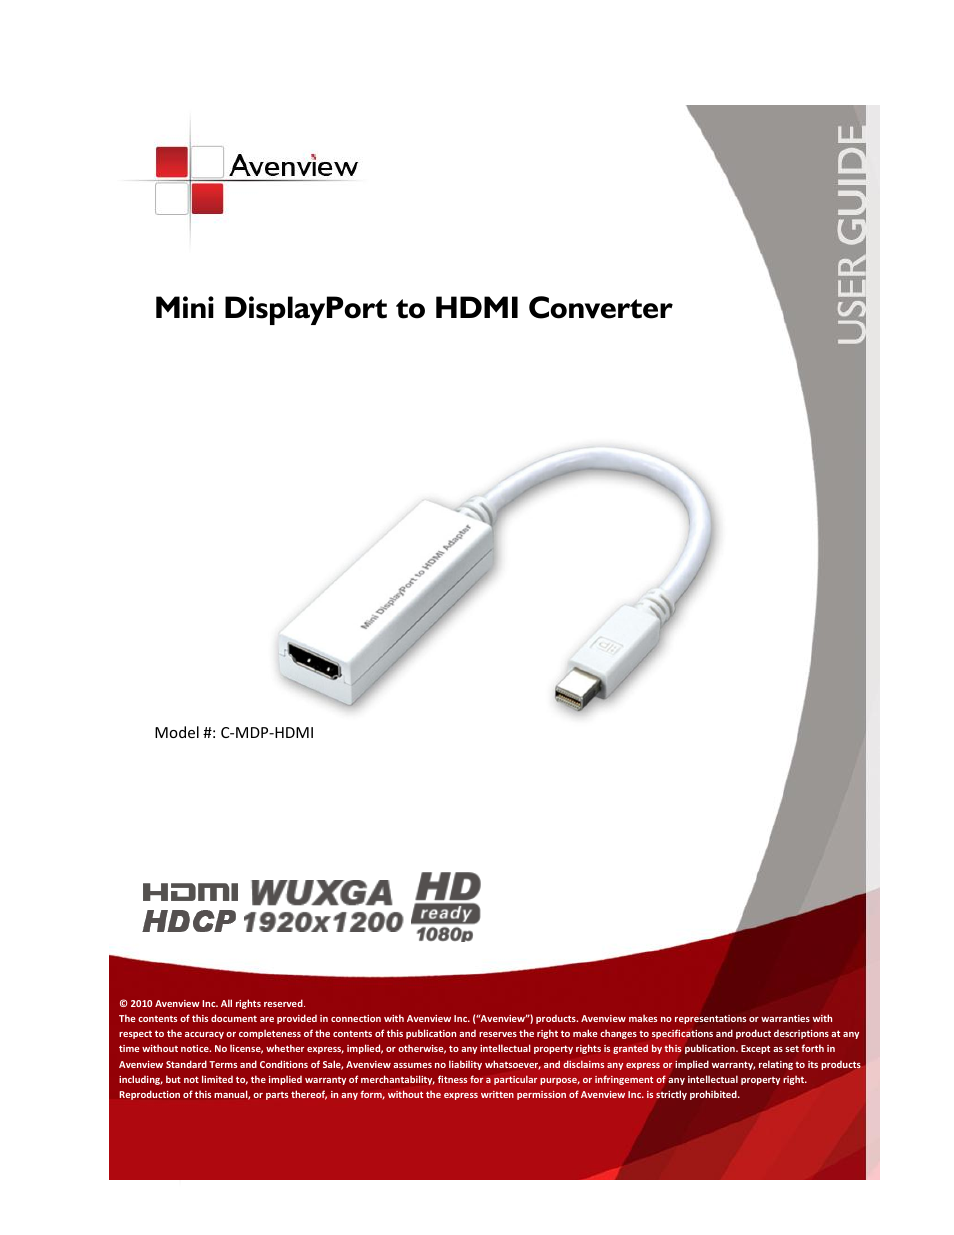 C-MDP-HDMI